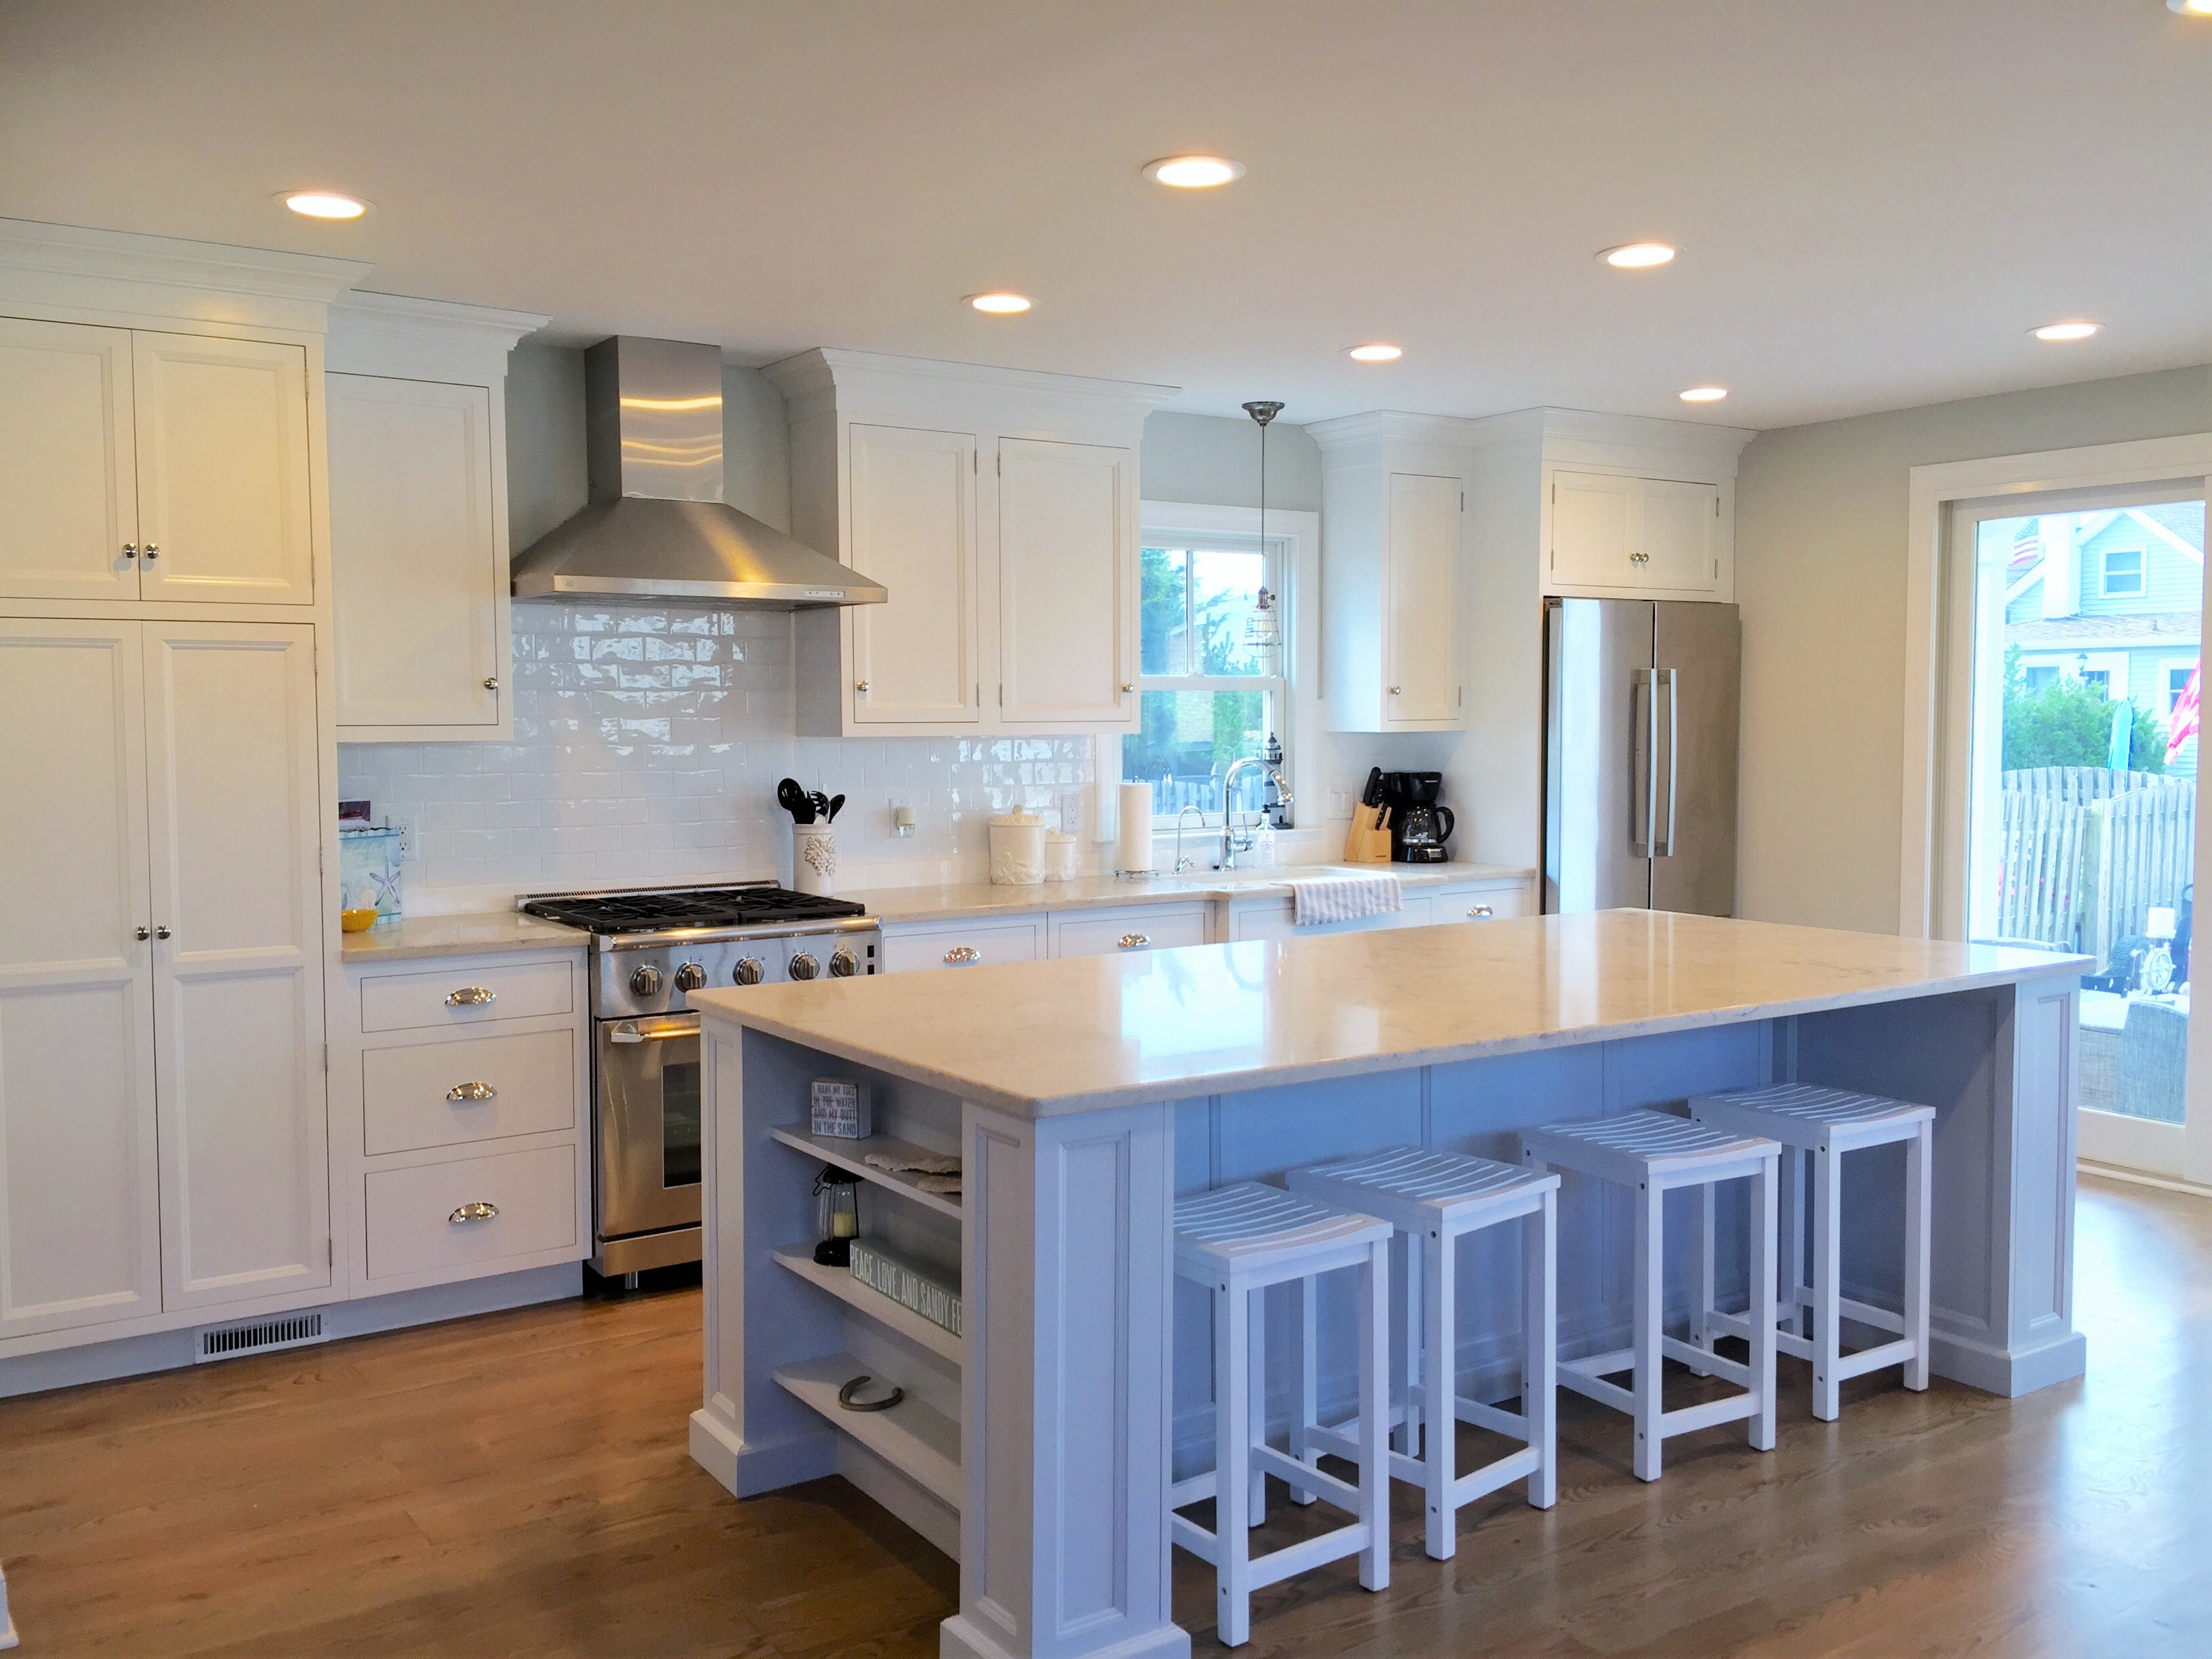 Expert kitchen design from Timber Ridge Construction